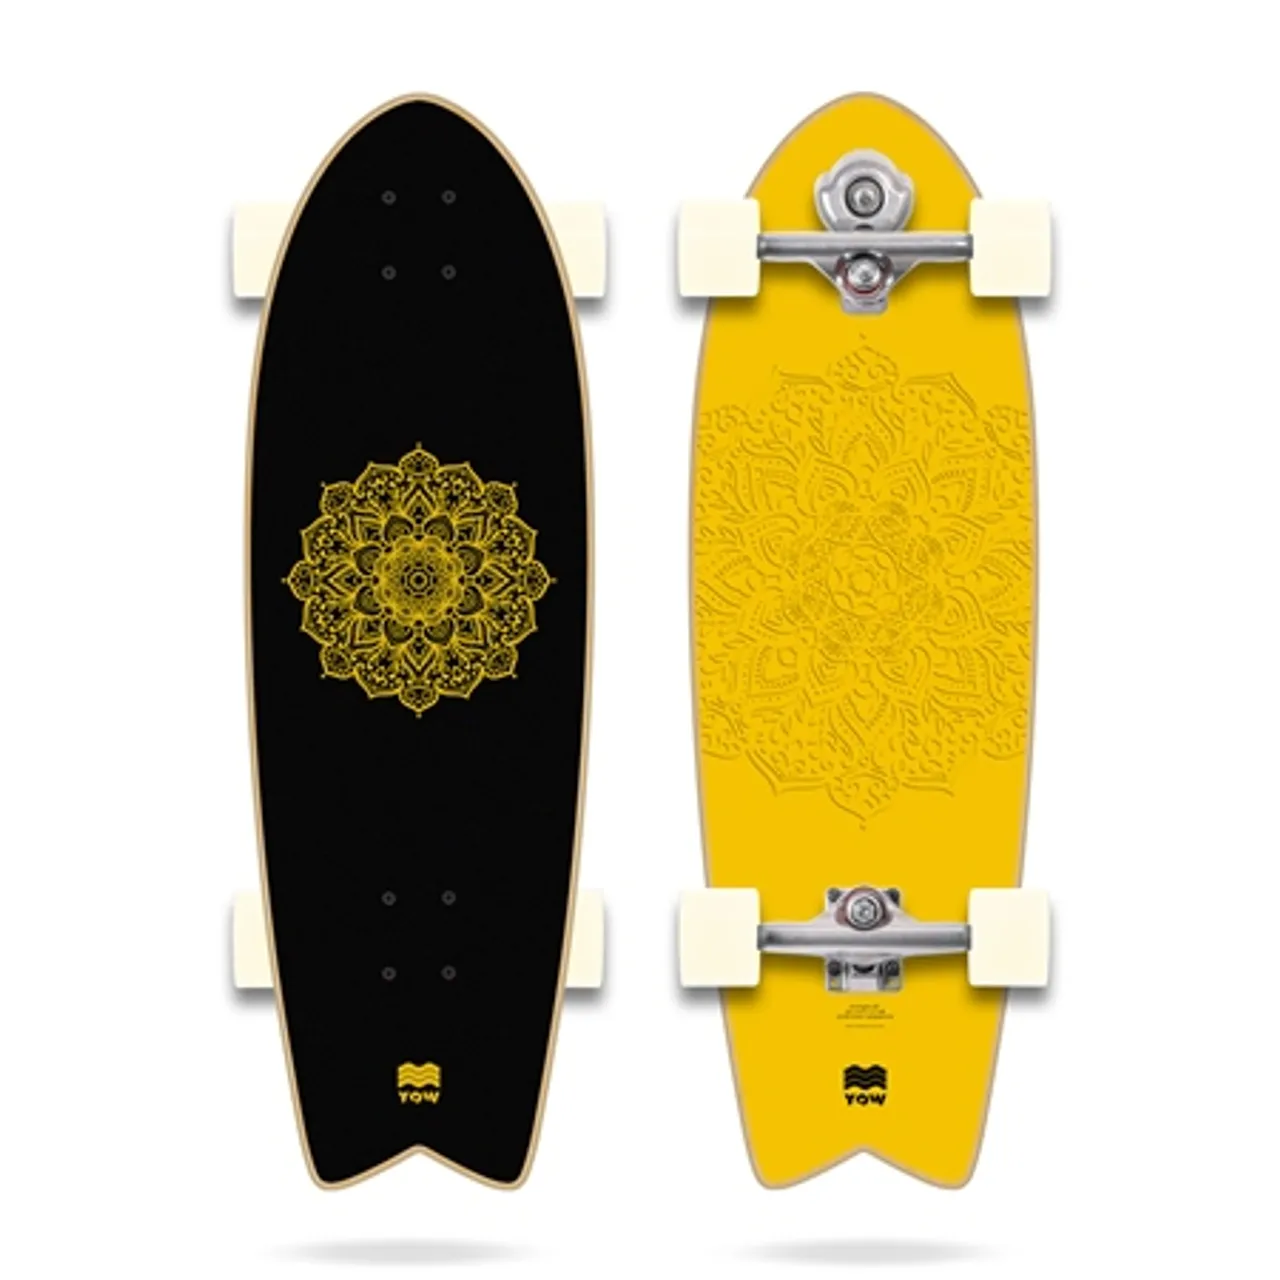 Yow Huntington 30" Skateboard - Black & Yellow - 30"